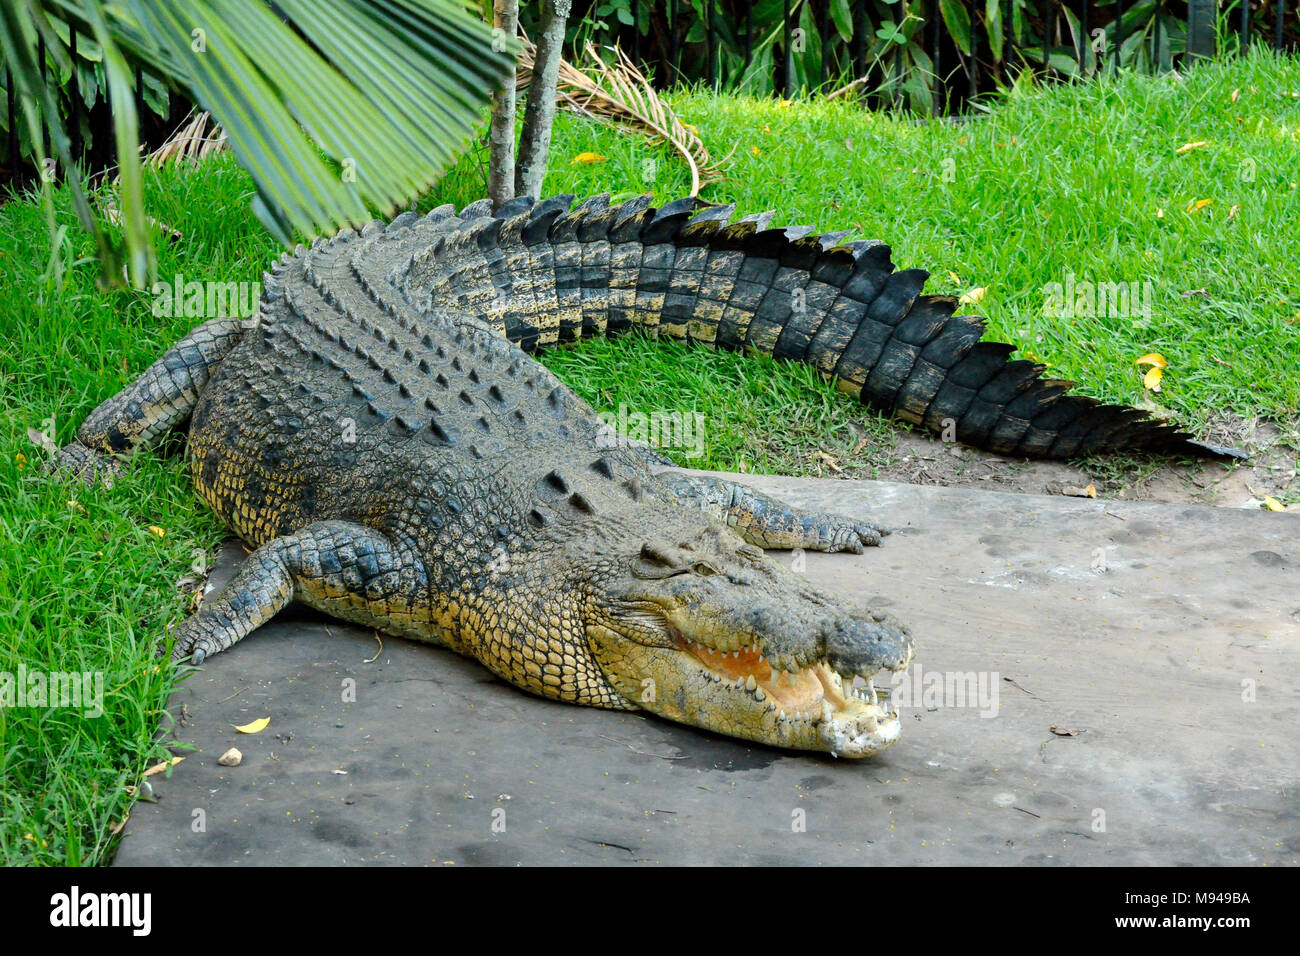 El cocodrilo de agua salada (Crocodylus porosus) en Australia. Foto de stock